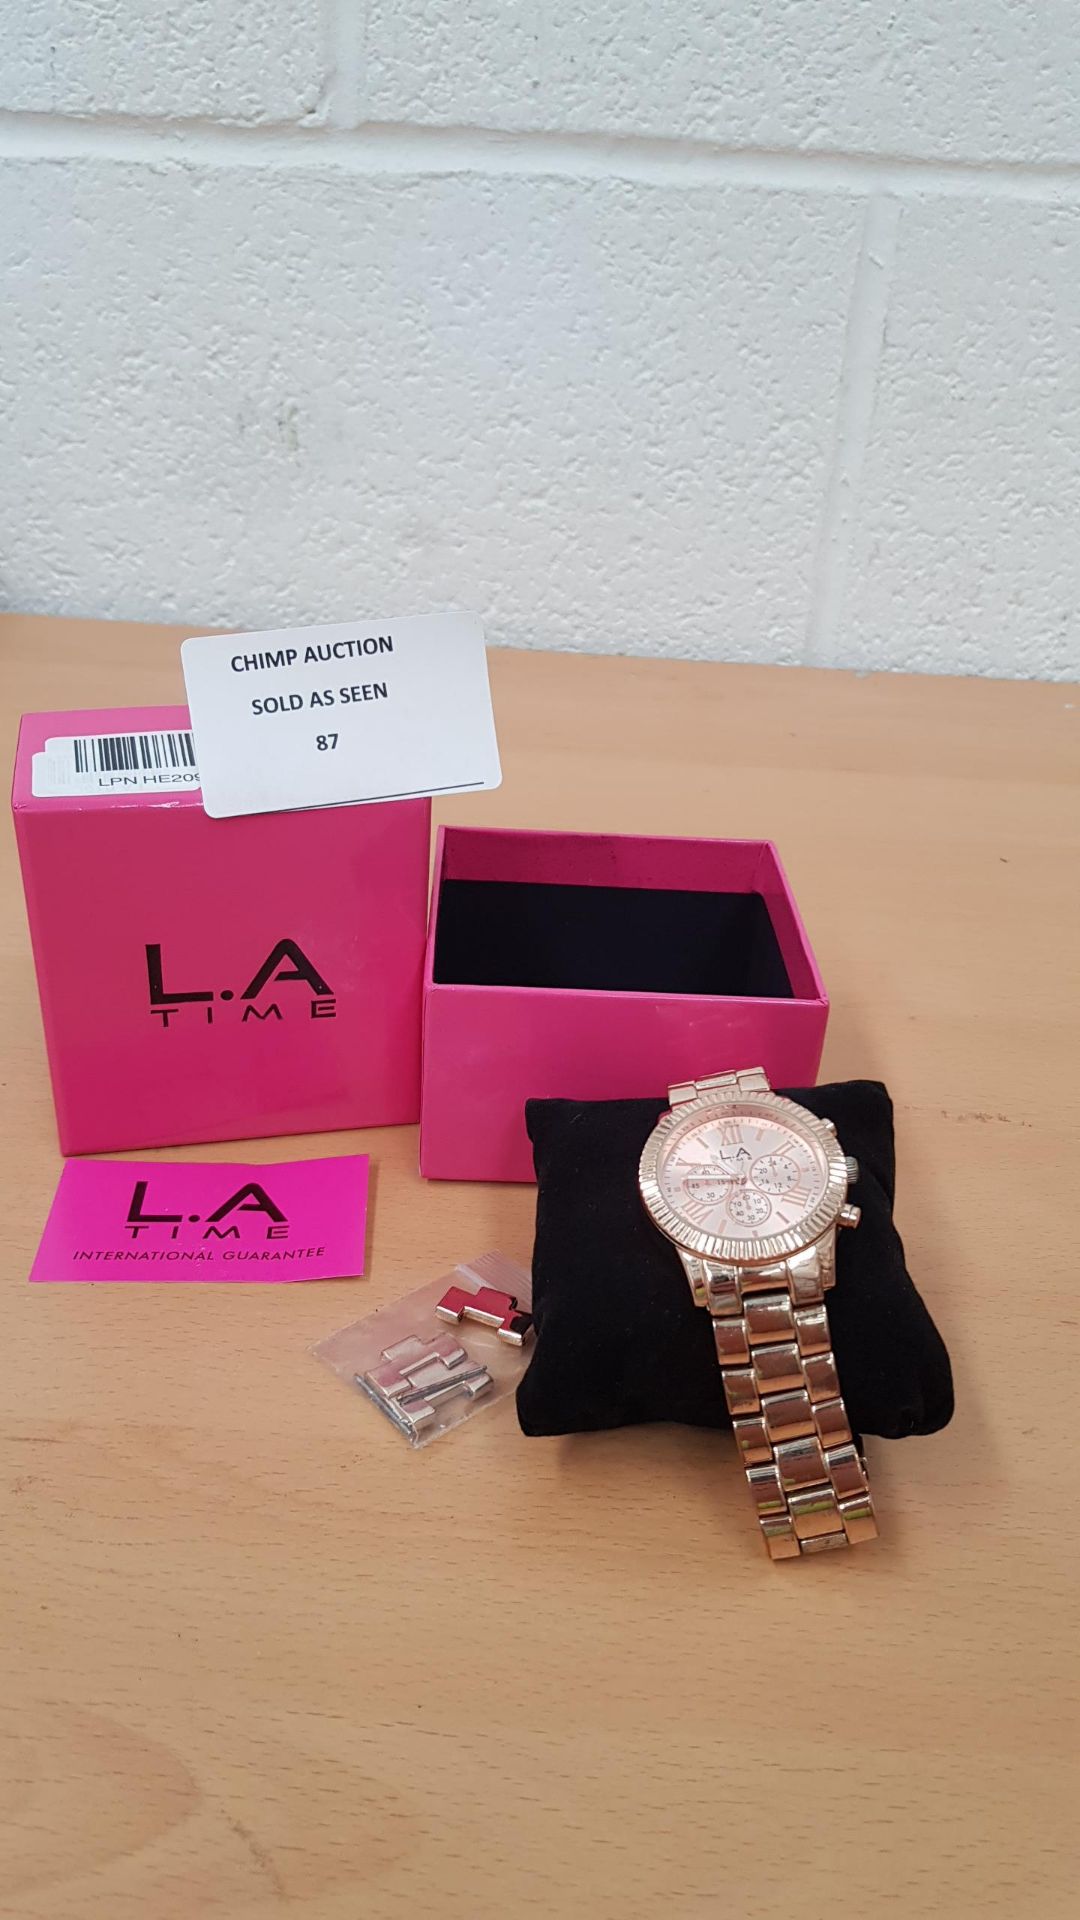 L.A Time ladies designer Watch